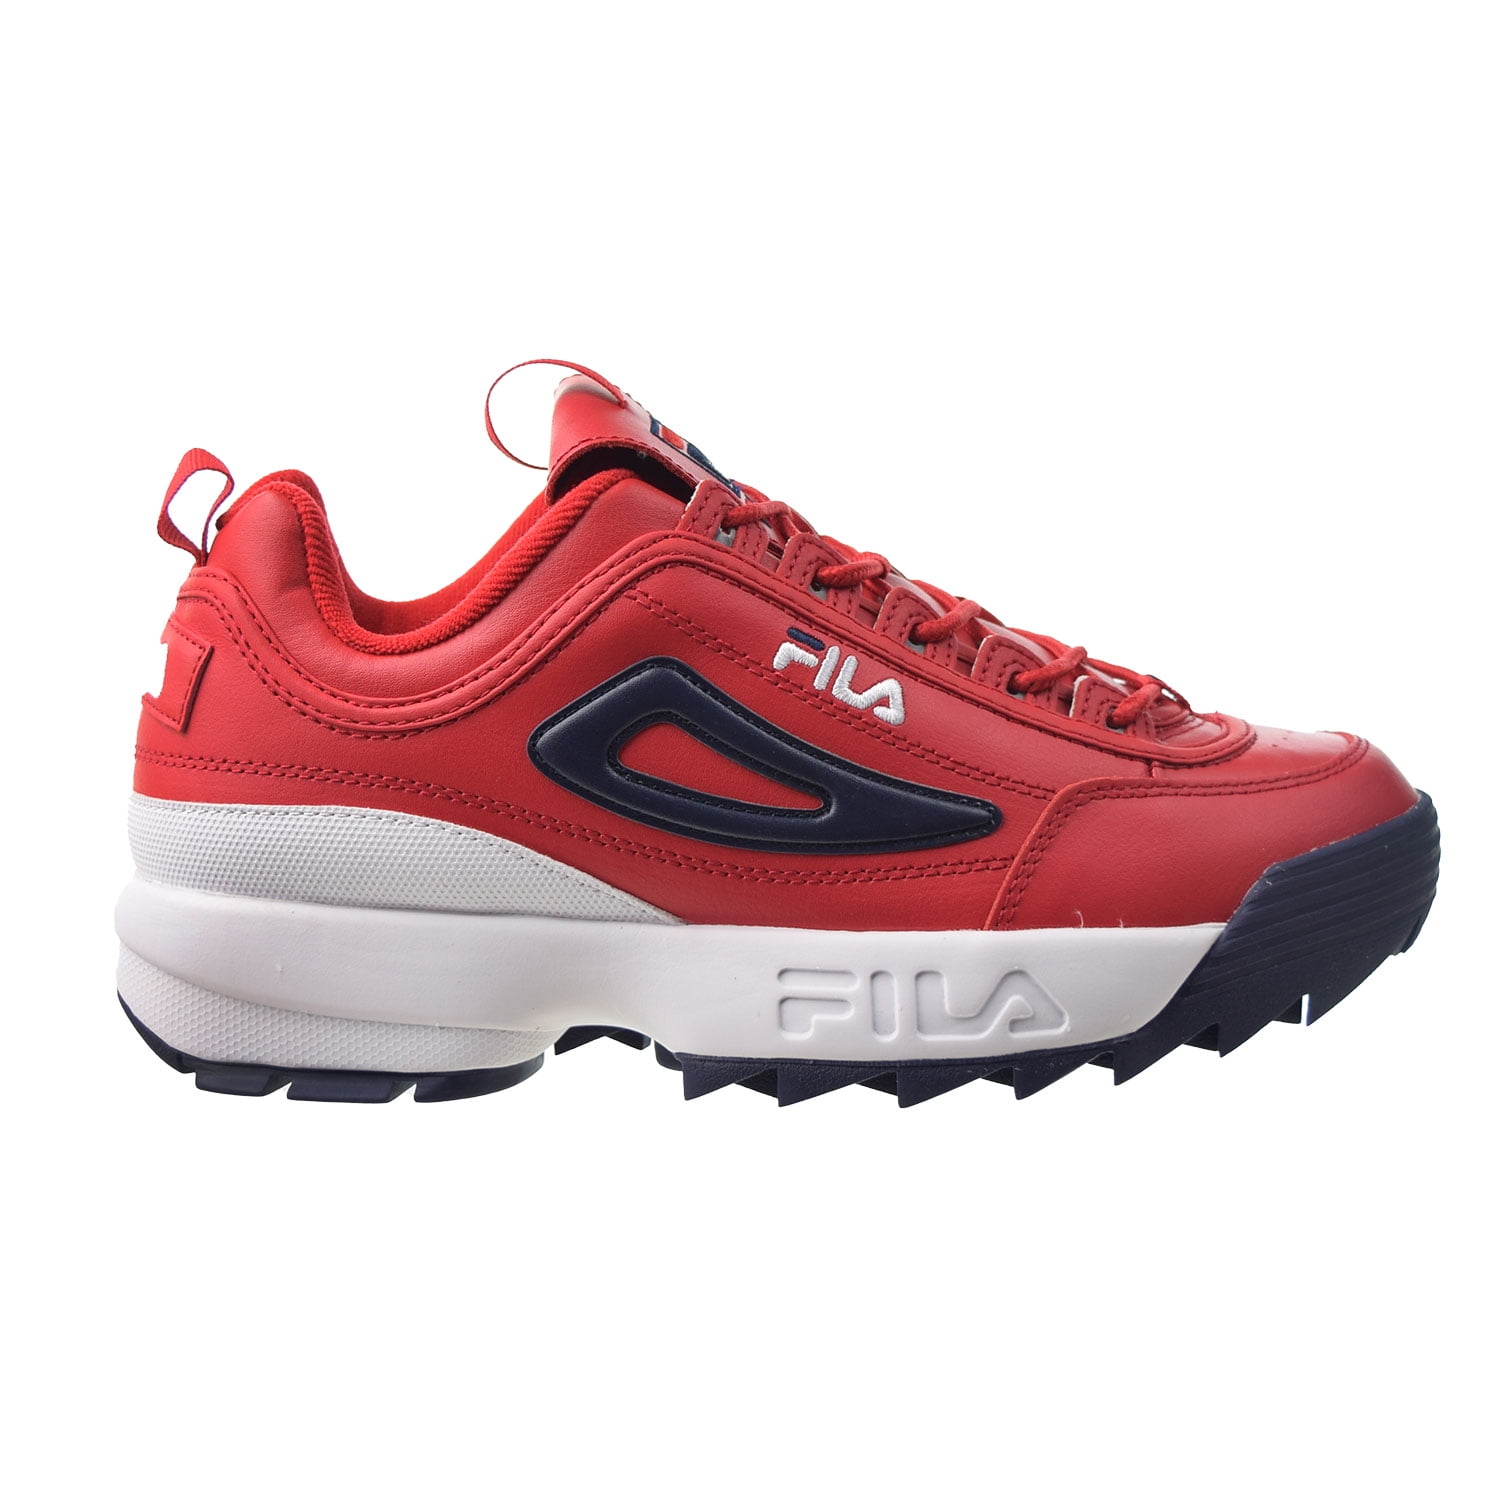 Fila Disruptor Premium Men's Shoes Red-White-Navy 1fm00139-616 - Walmart.com